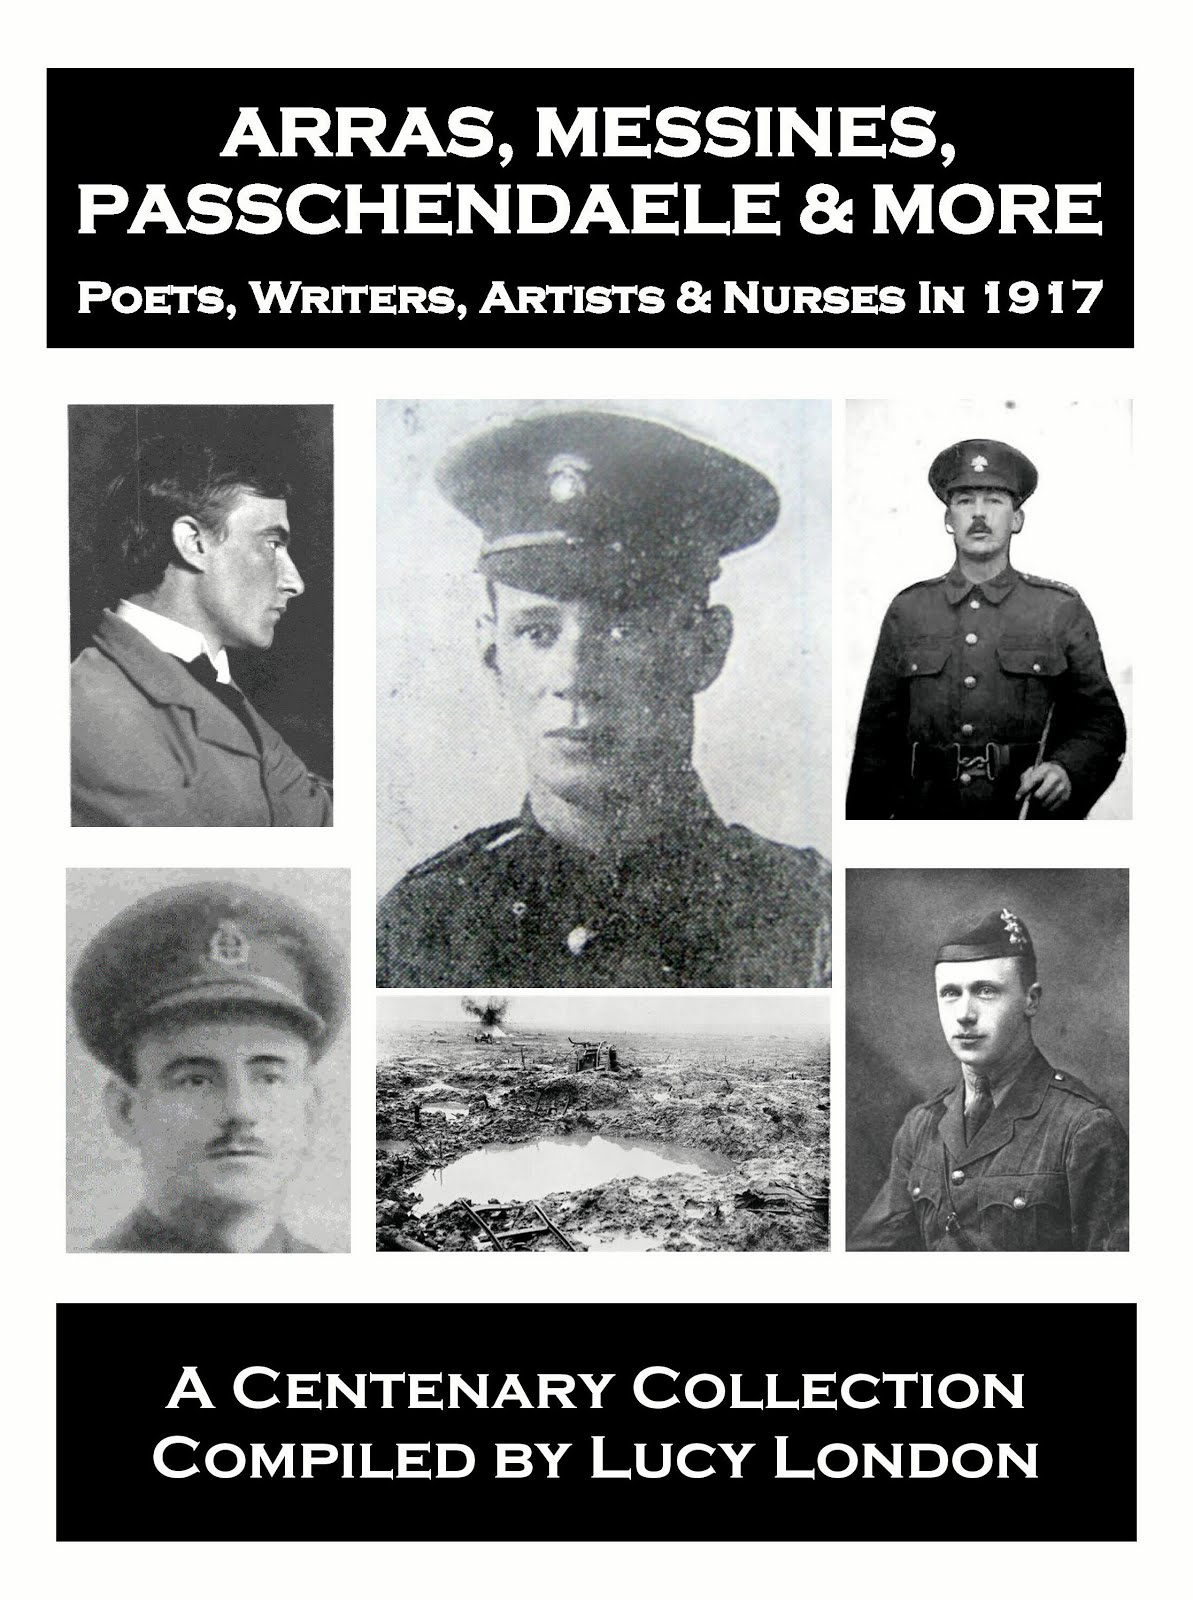 Arras, Messines, Passchendaele & More - 1917 book now available